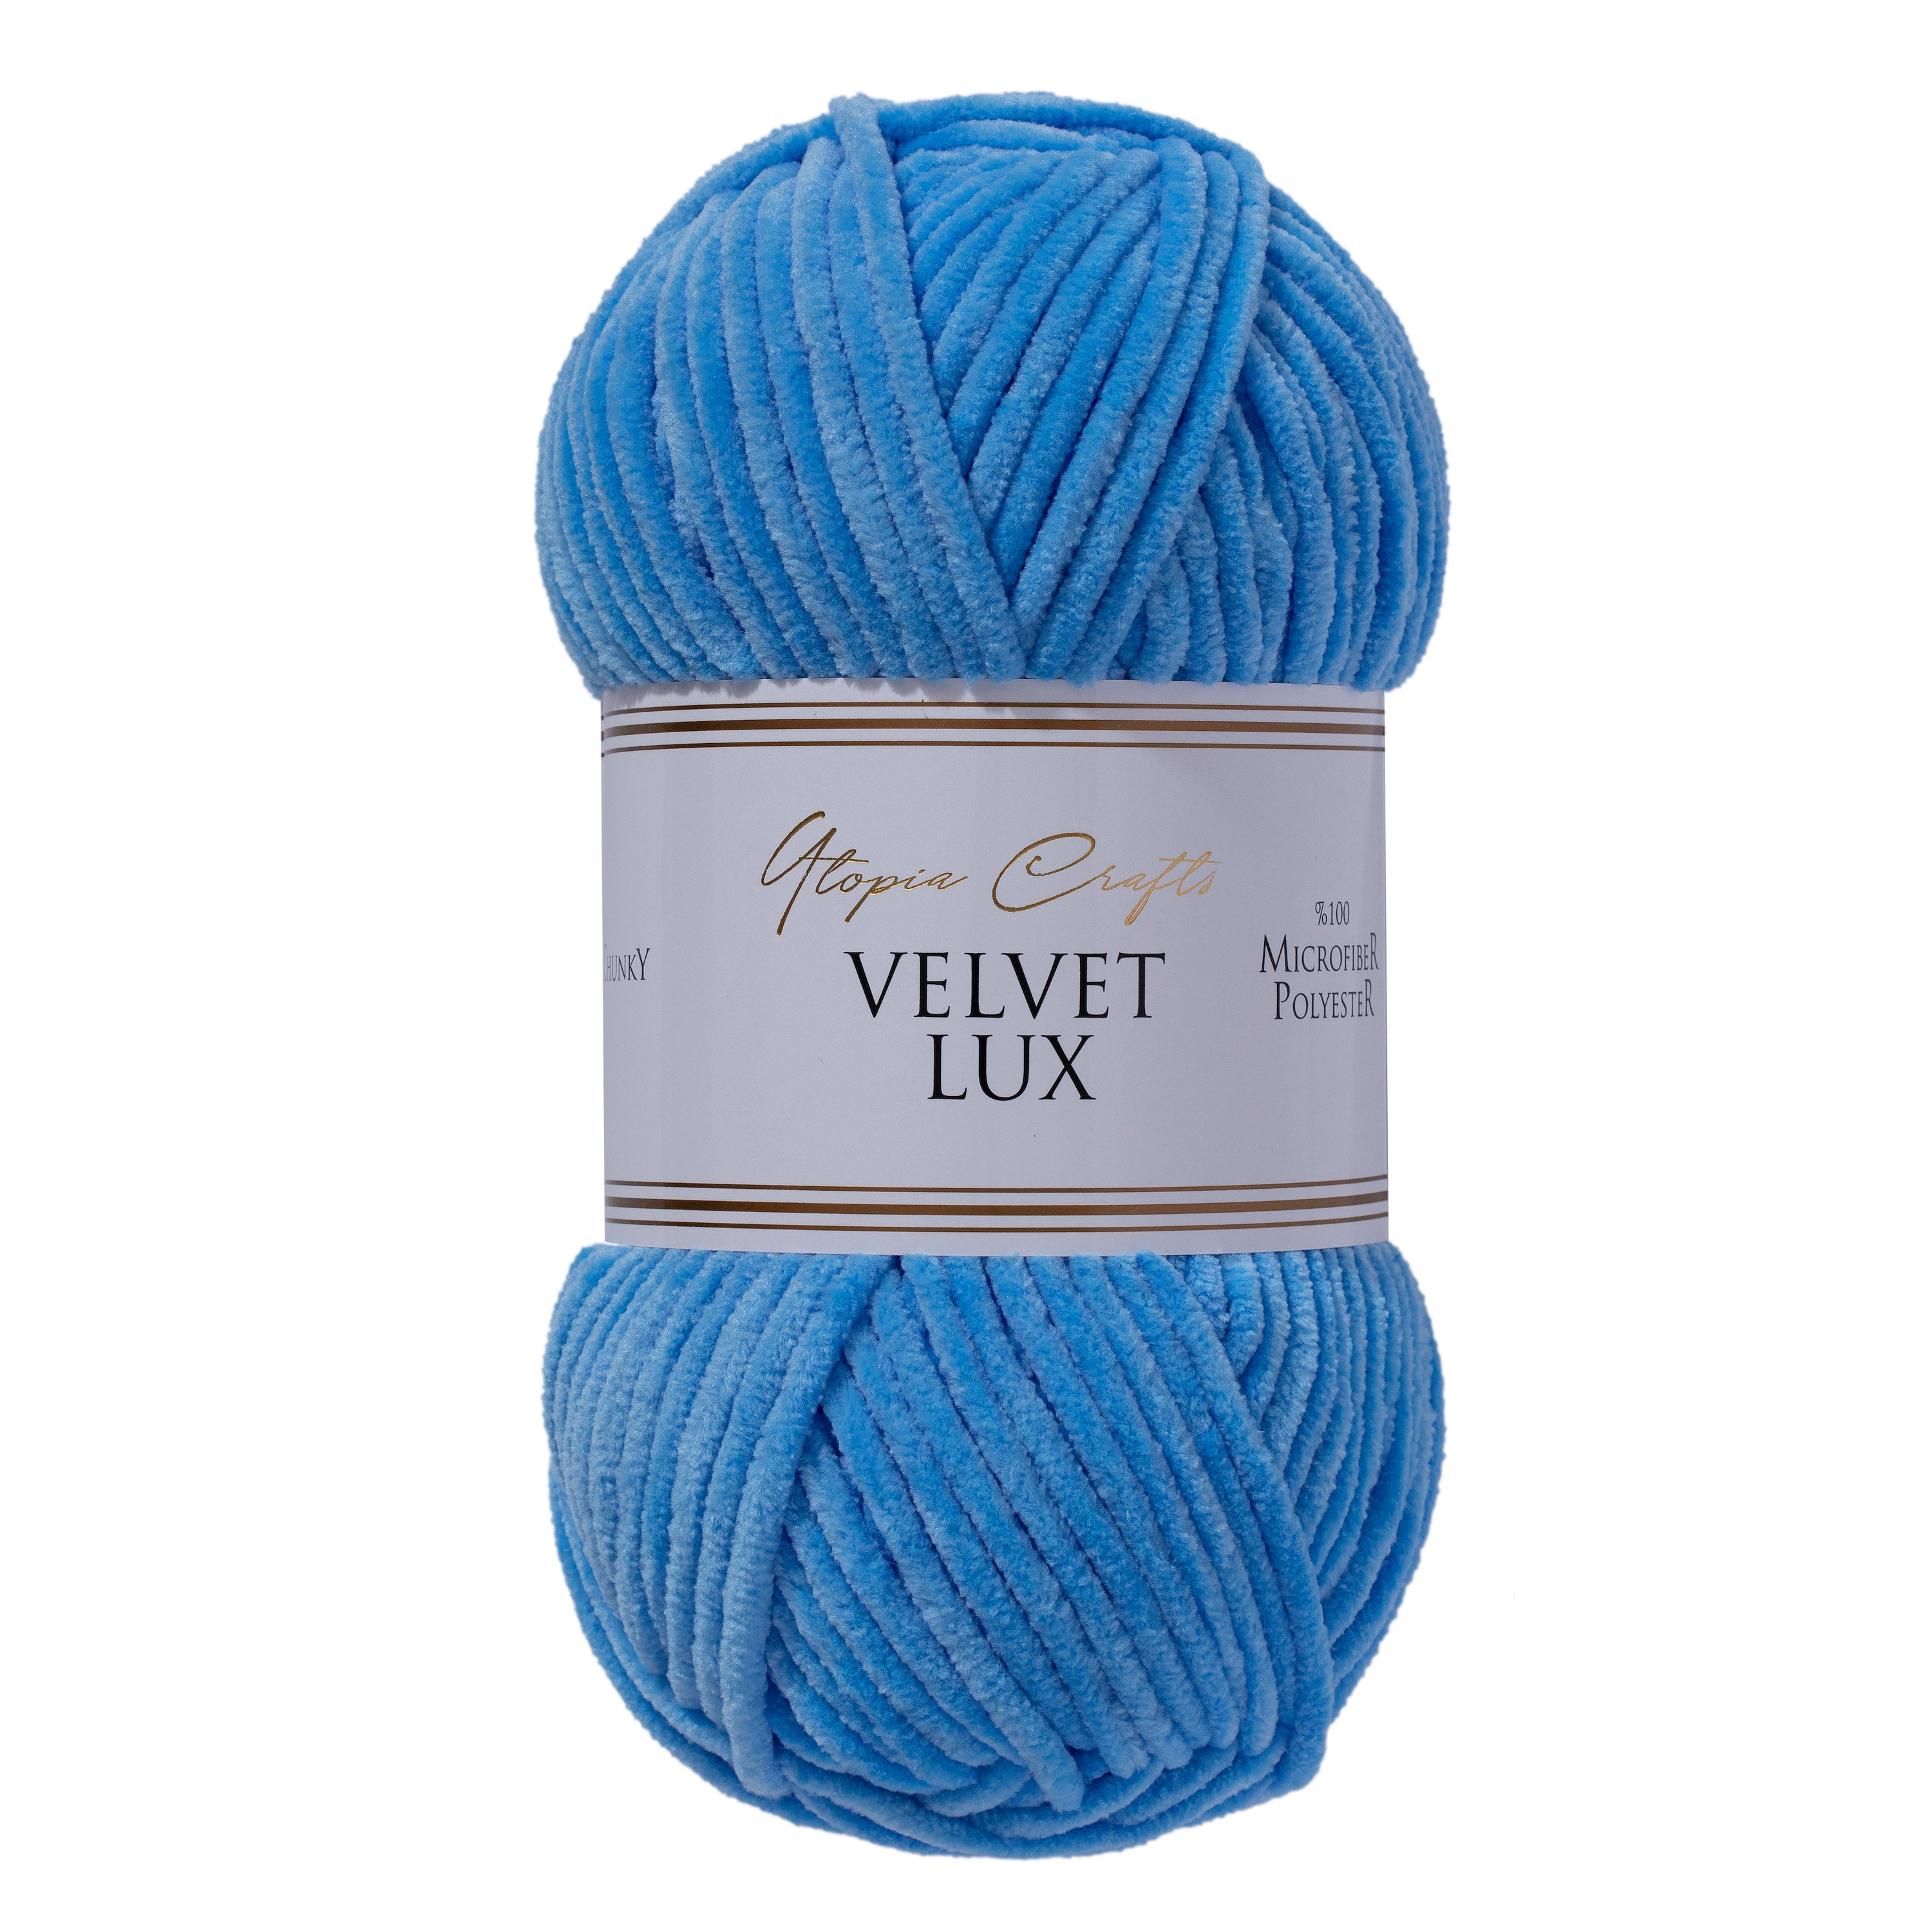 Utopia Crafts Velvet Lux Chenille Super Soft Chunky Yarn for Knitting and Crochet, 100g - 110m (Sky Blue)